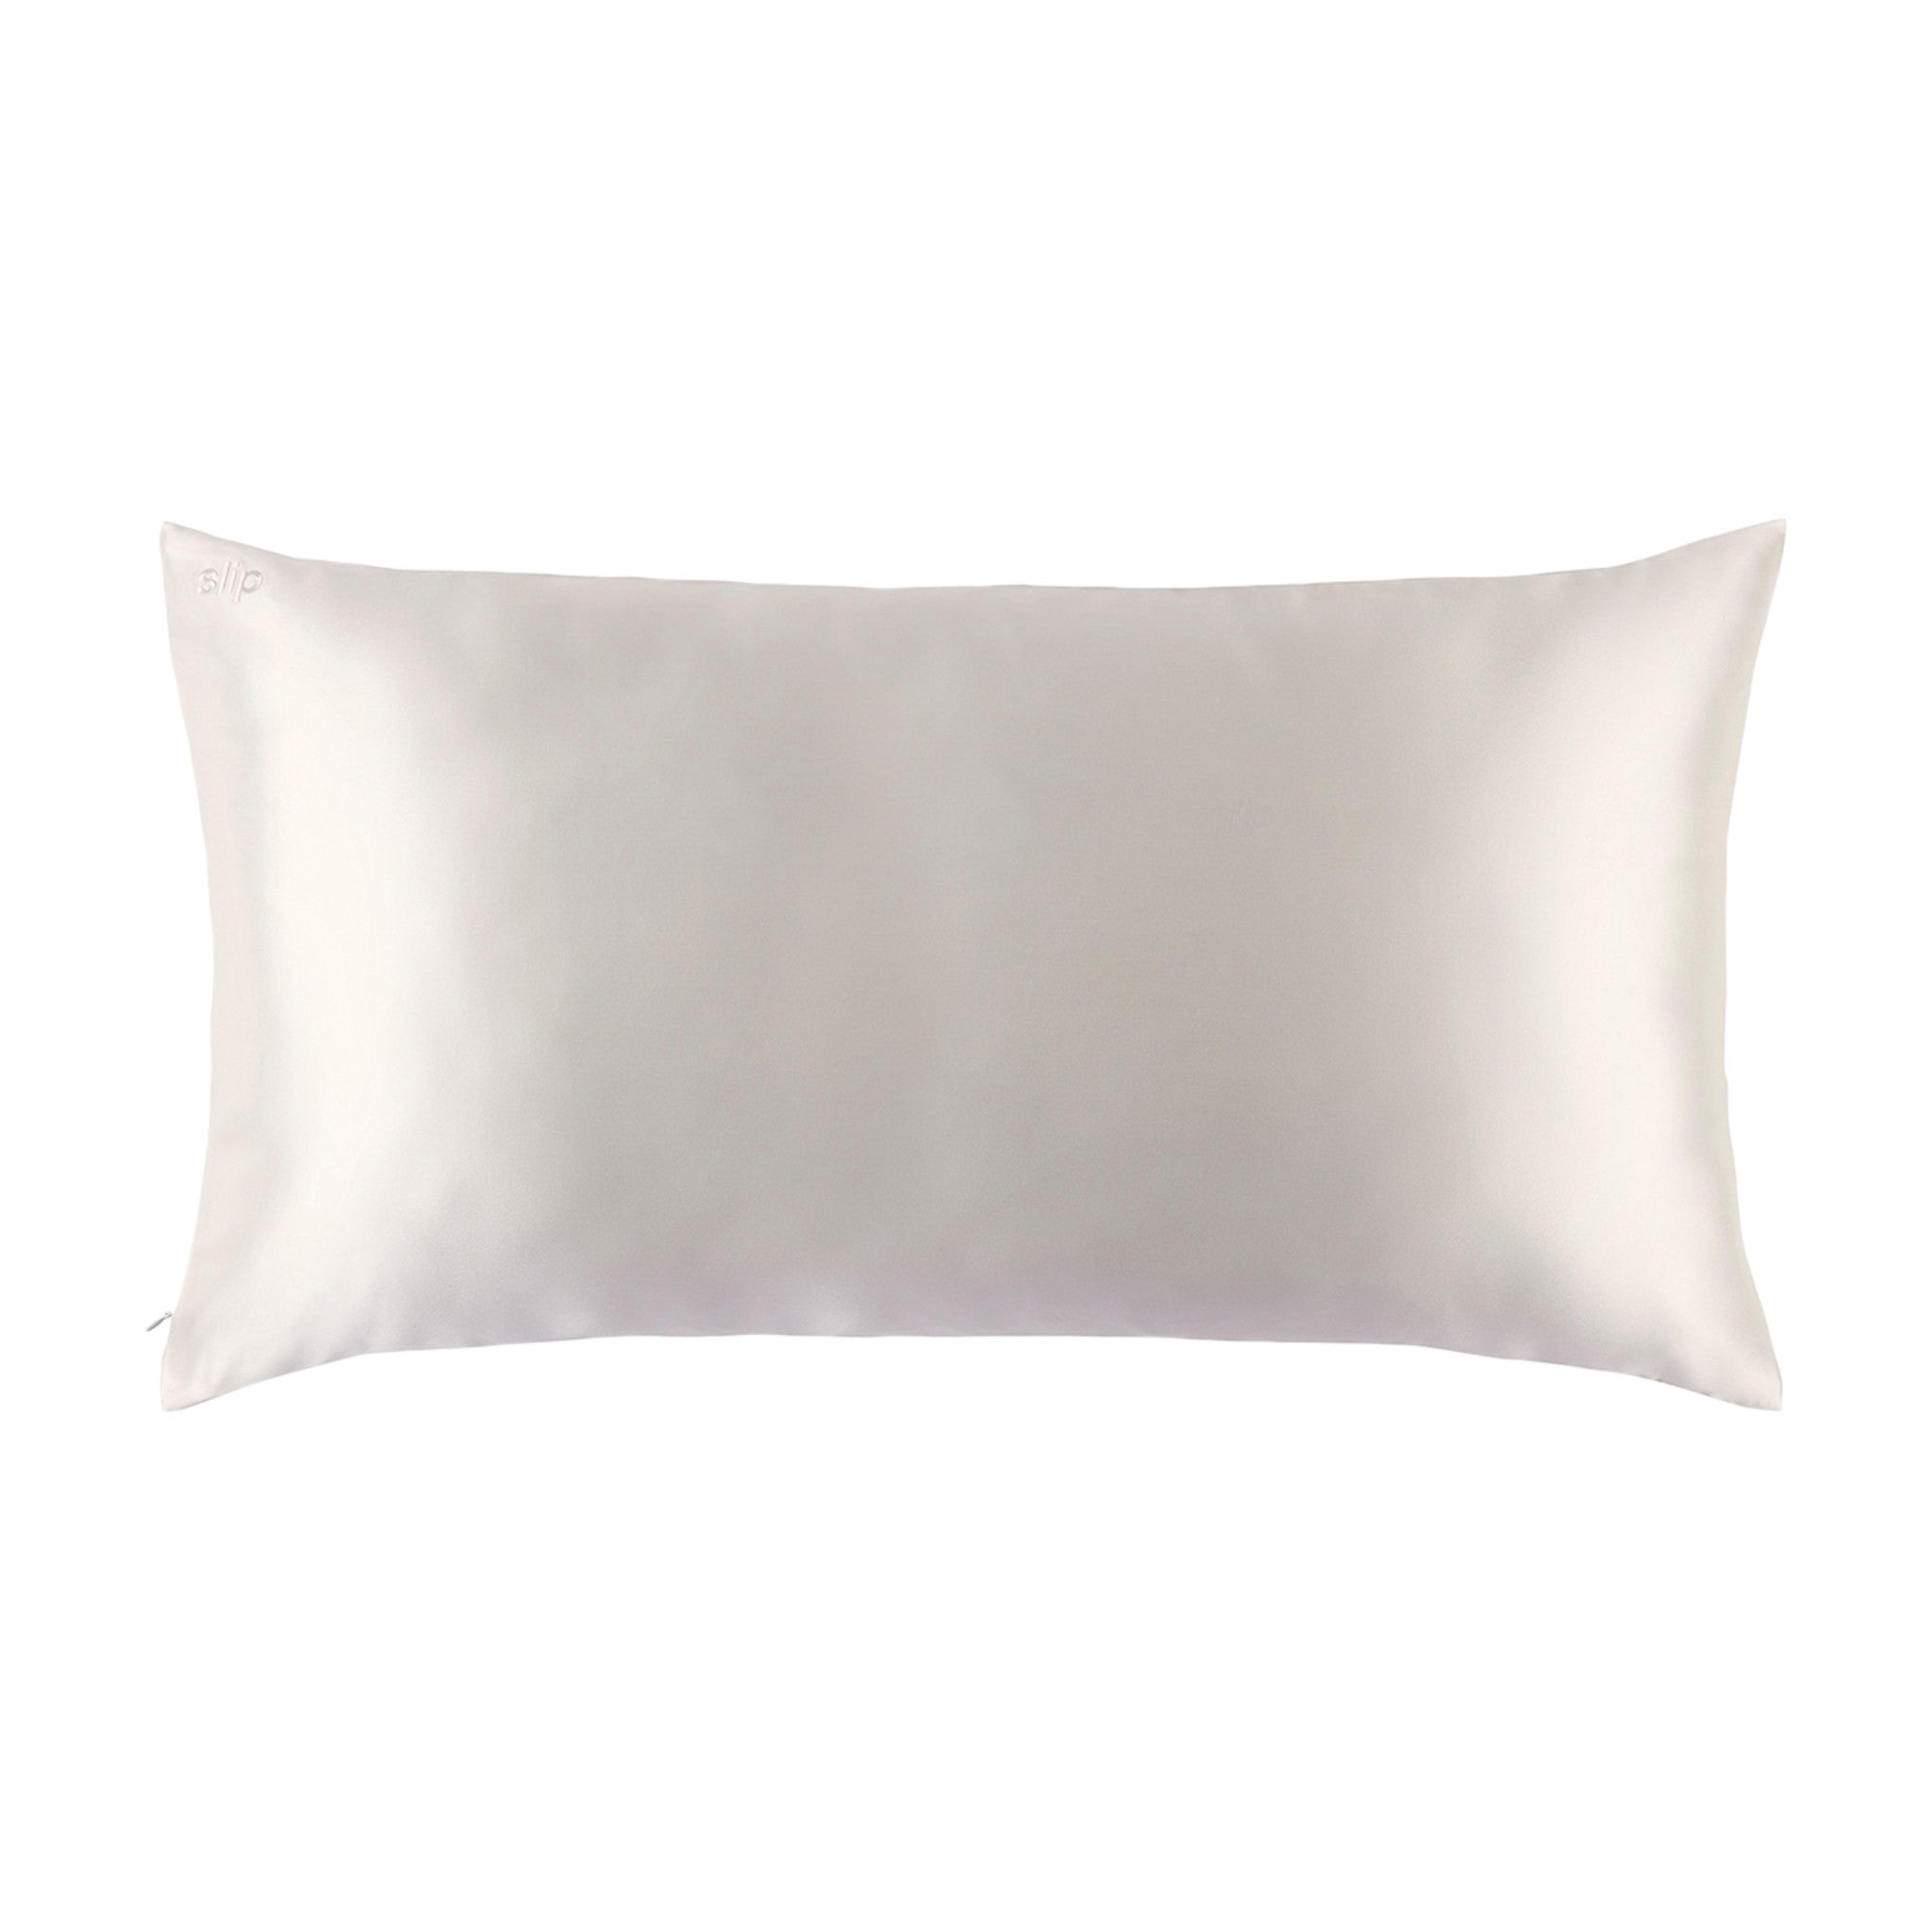 Slip Pure Silk King Pillowcase Color/Shade variant: white main image.